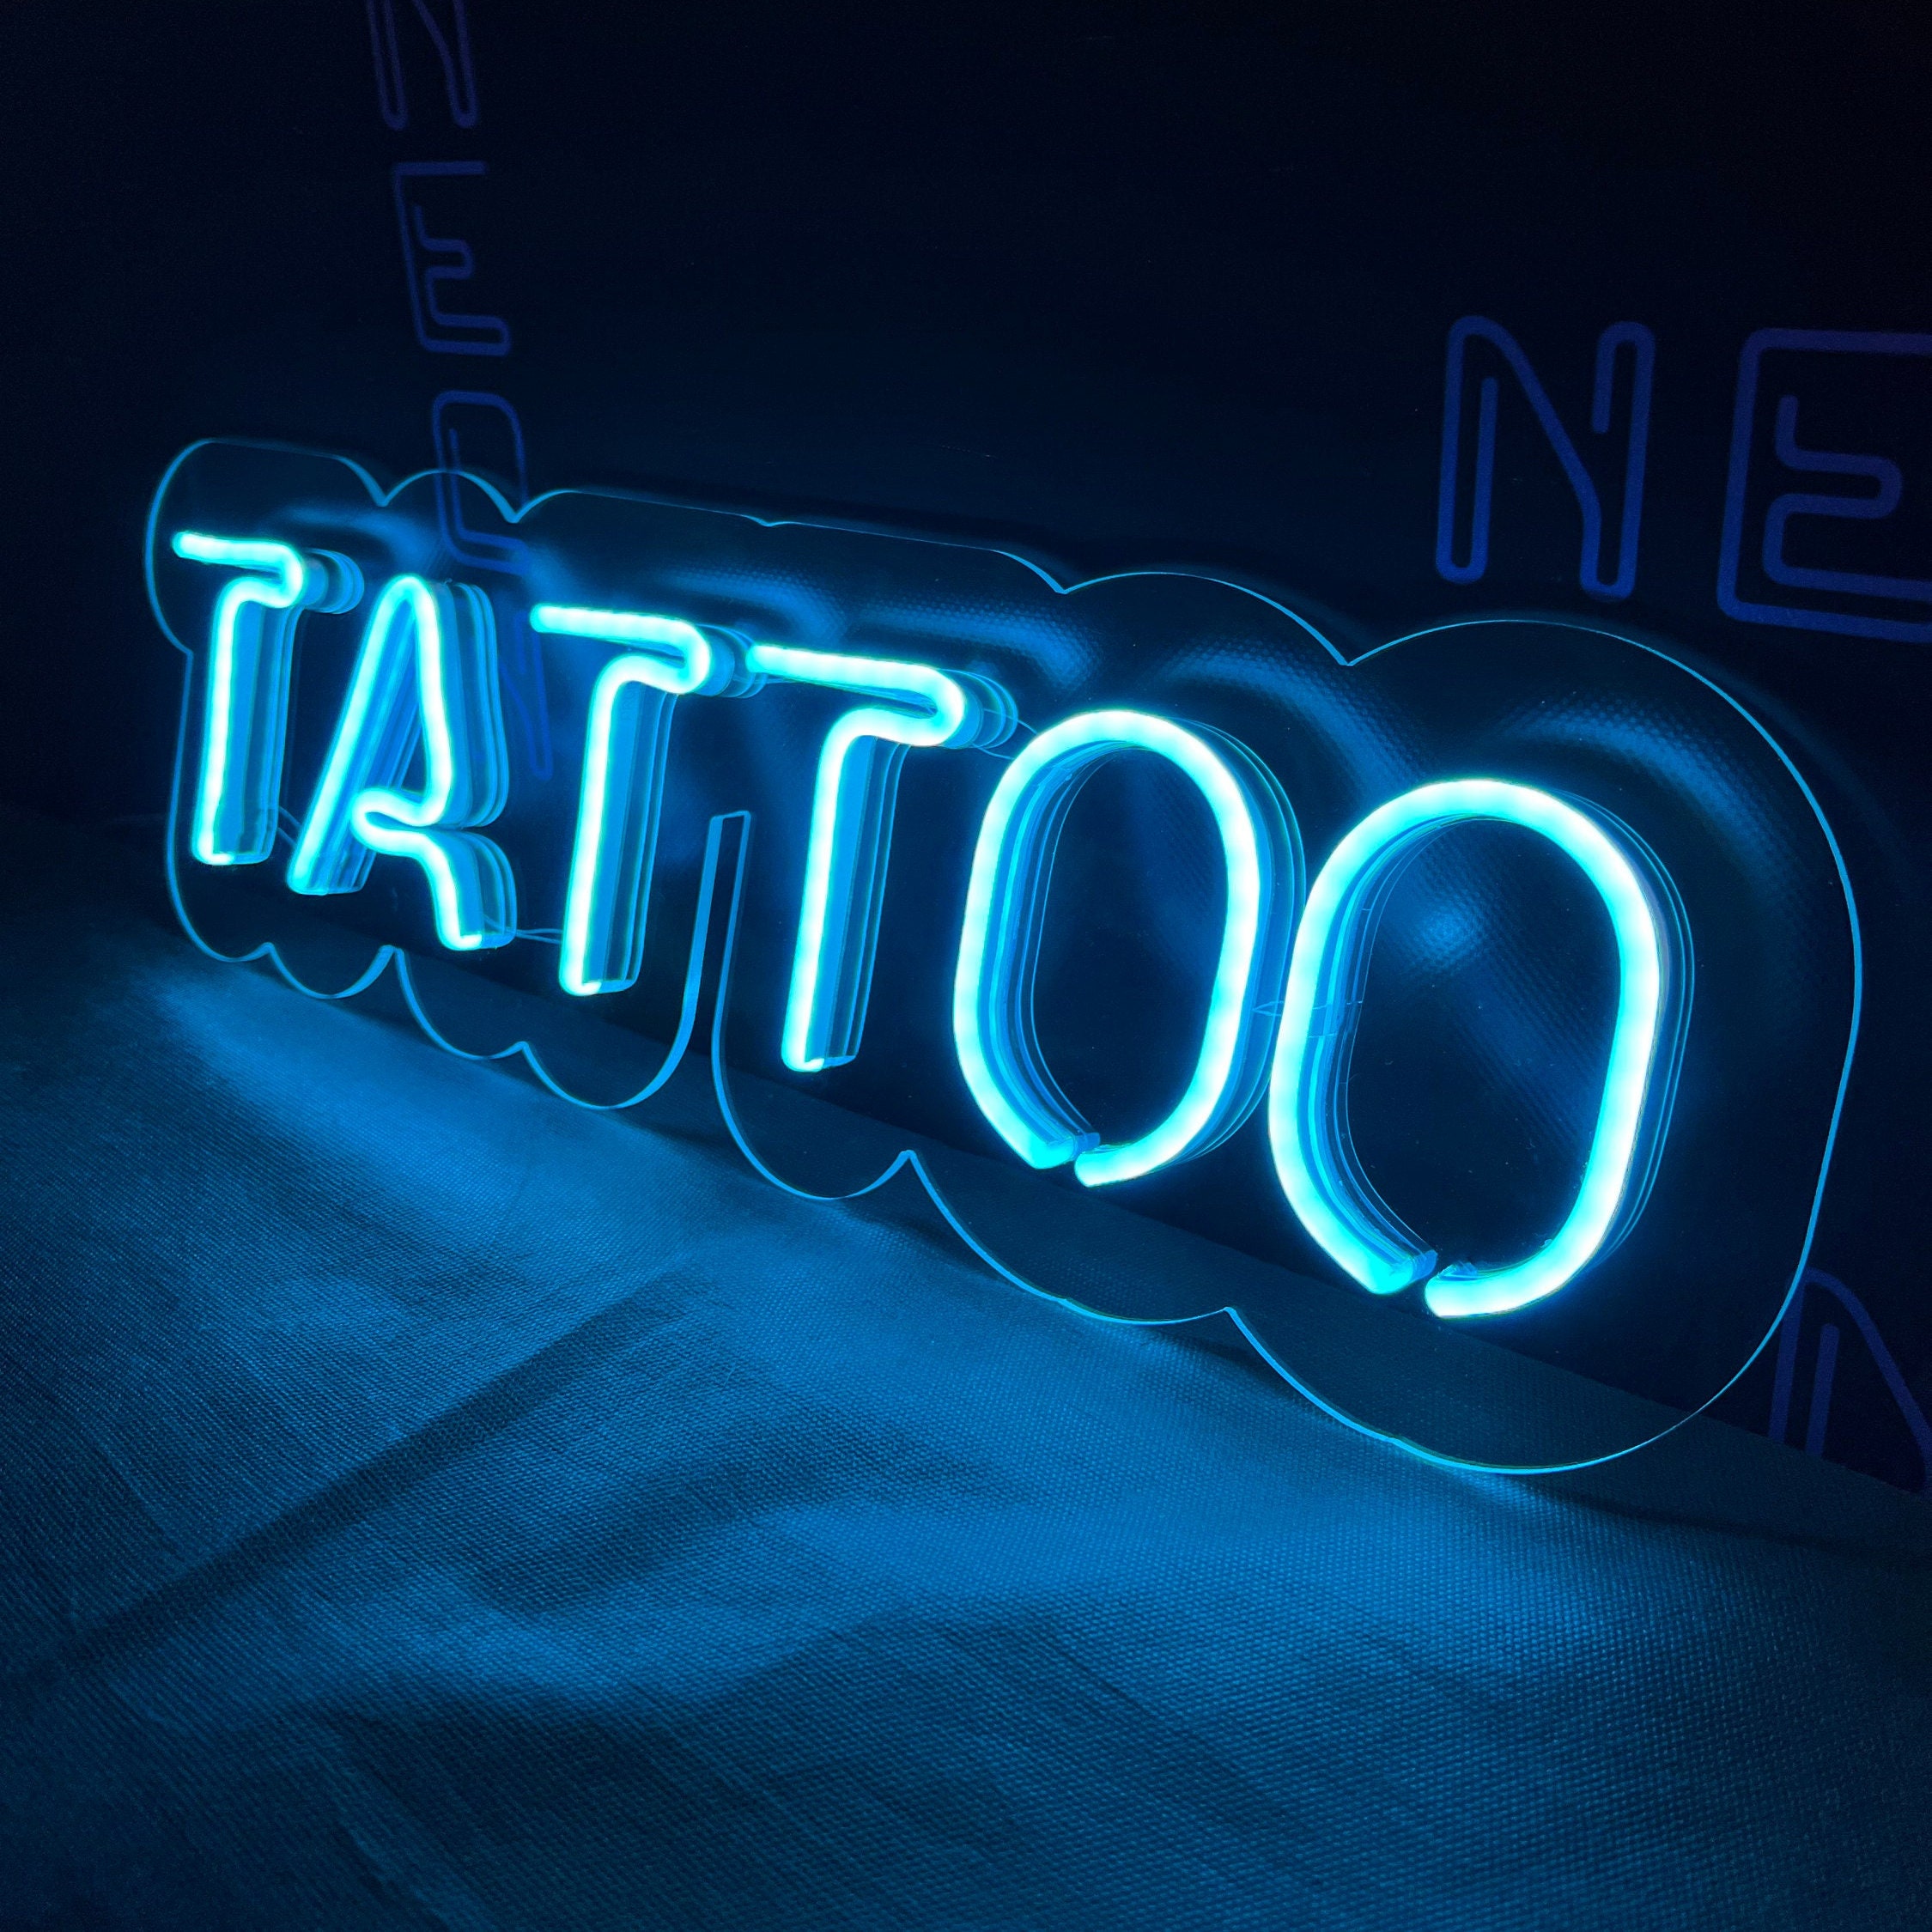 Free Vector  Tattoo salon neon text with tattoo machine neon sign night  bright advertisement